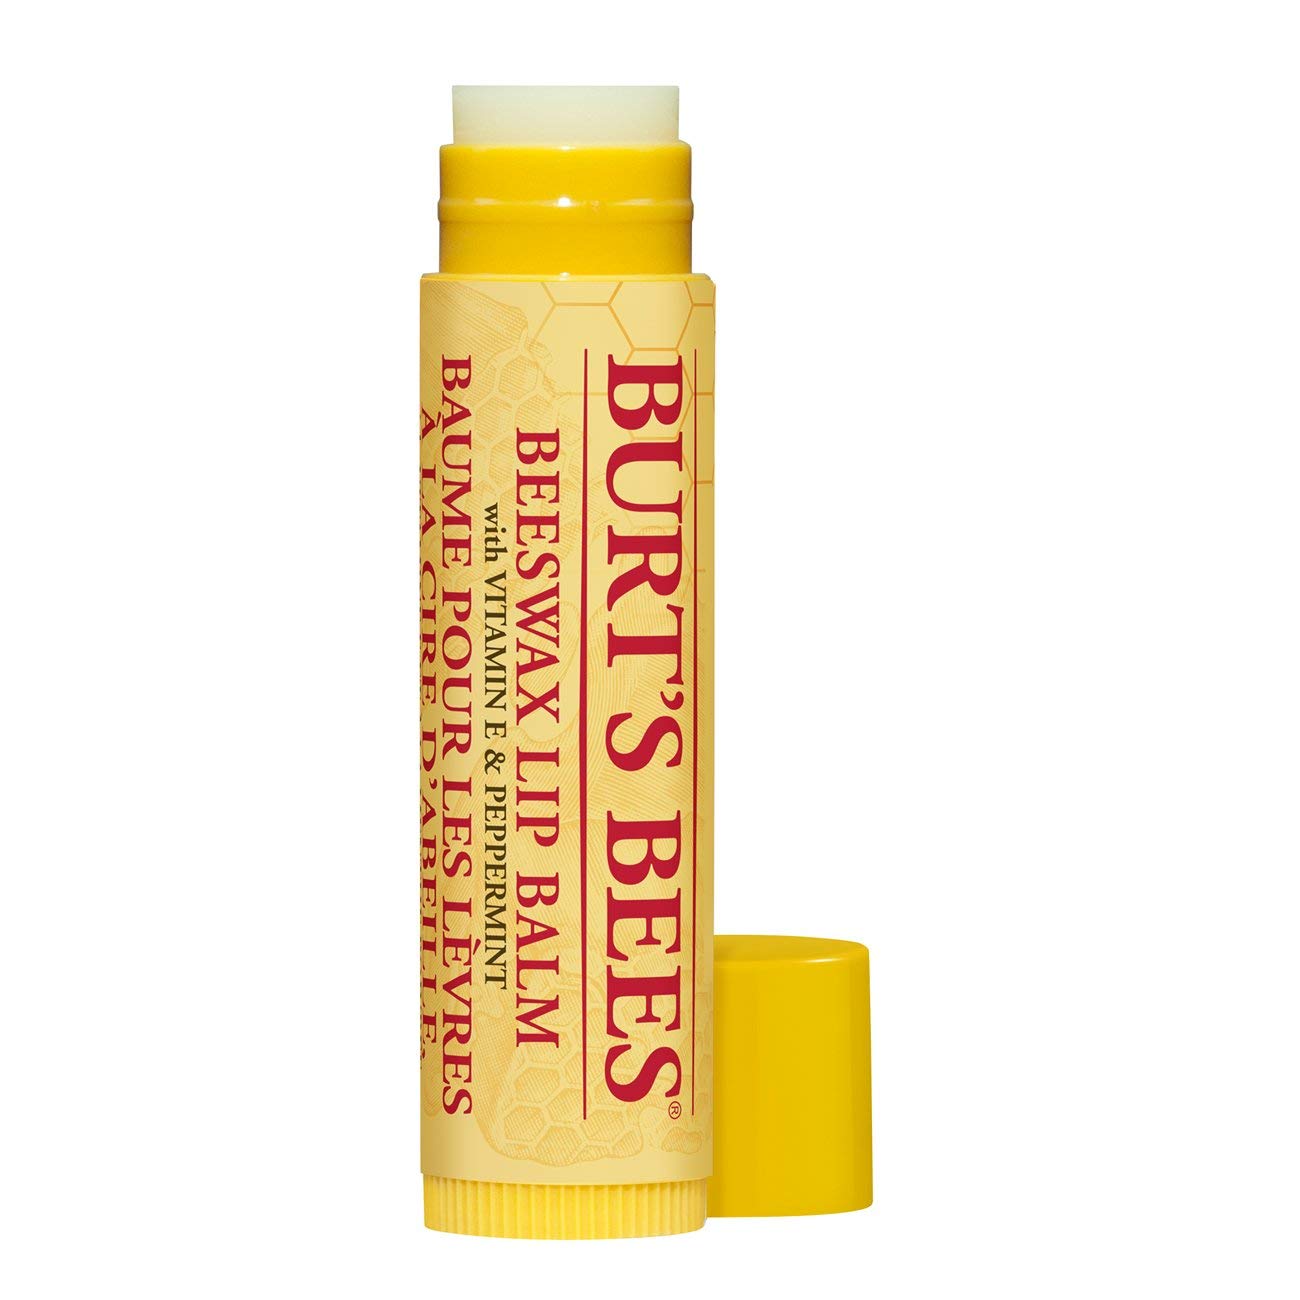 Burt’s Bees Beeswax lip balm